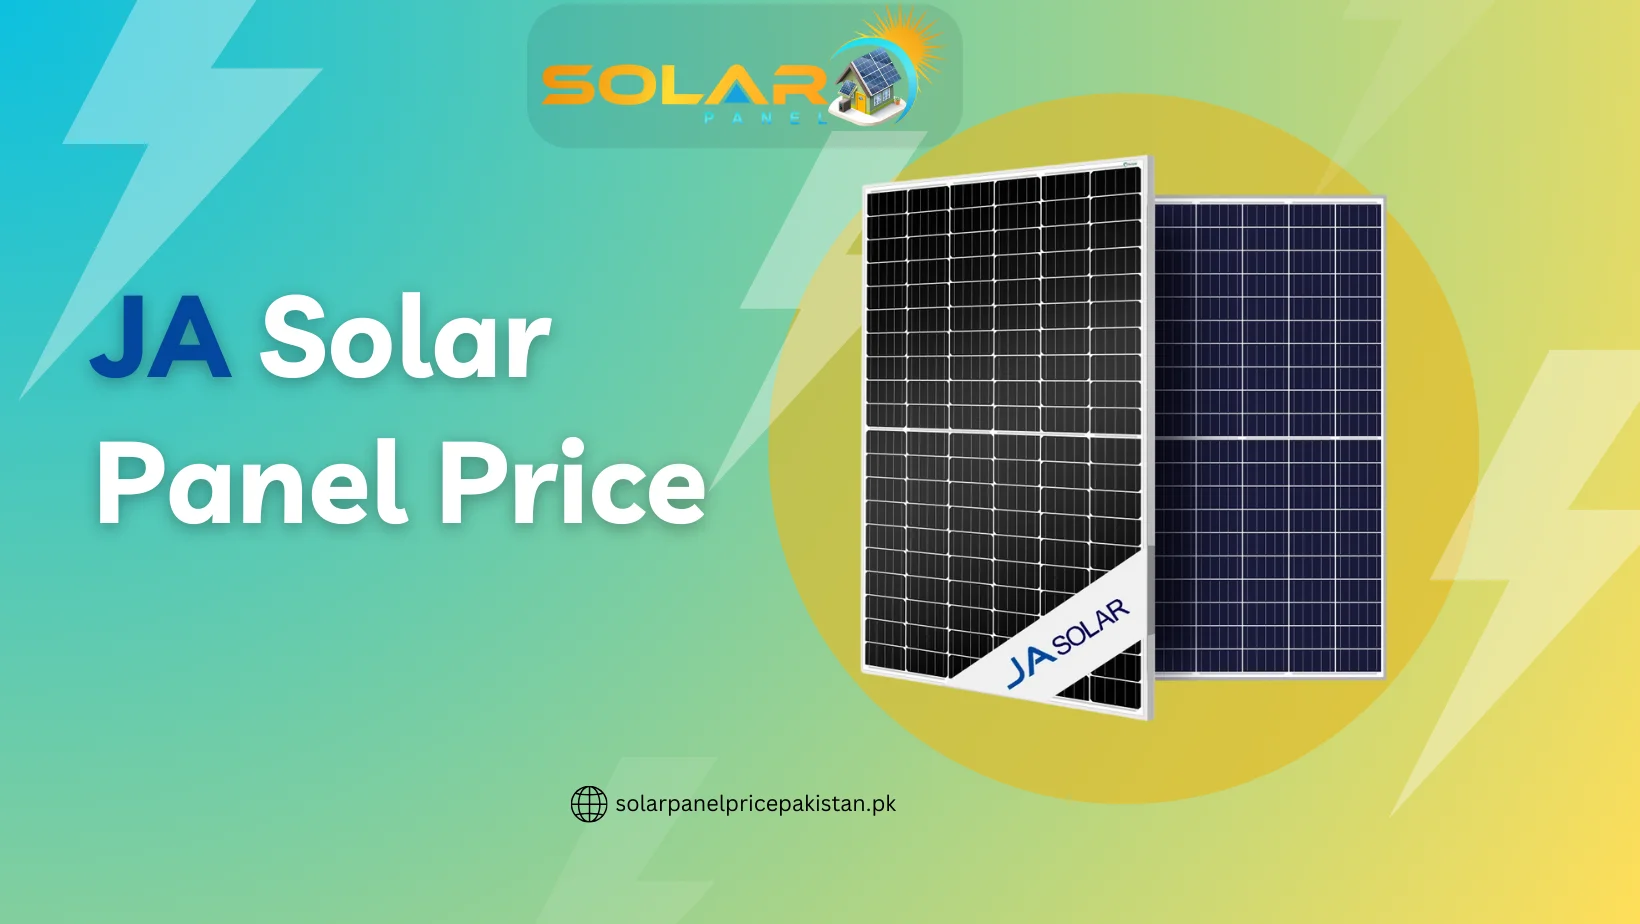 JA Solar Panel Price